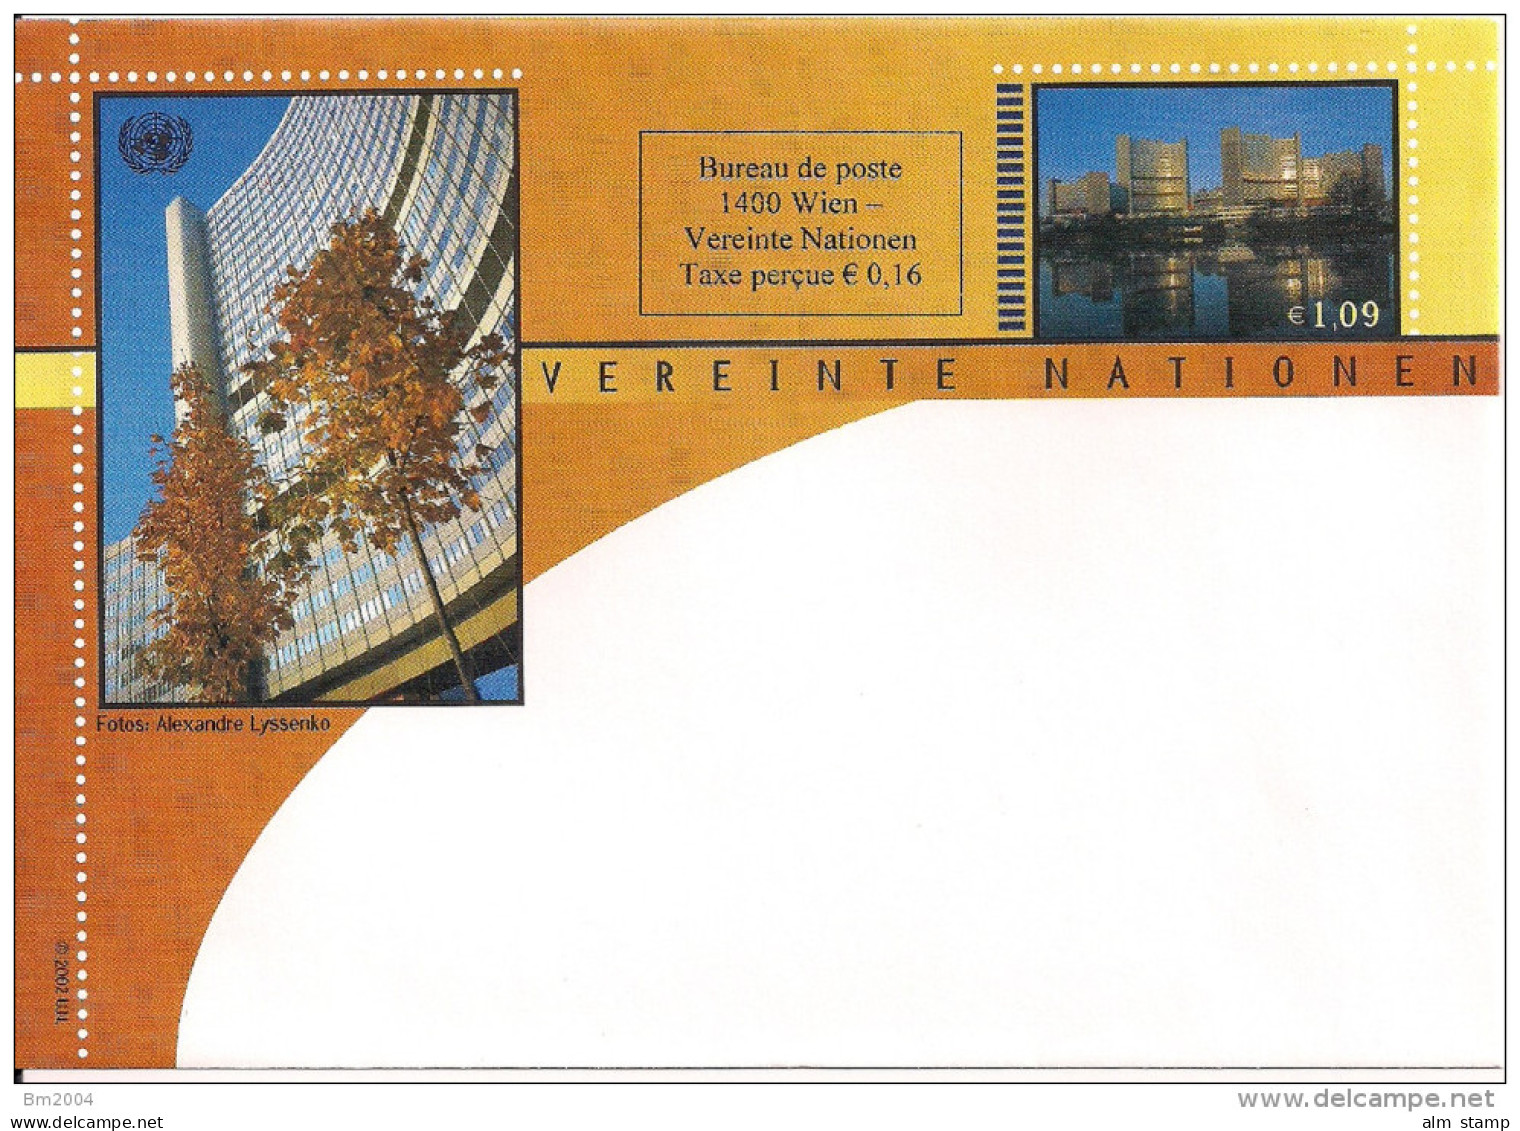 2002 UNO Wien  Ganzsache  Bureau De Poste  1400 Wien  EUR 1,09 - FDC